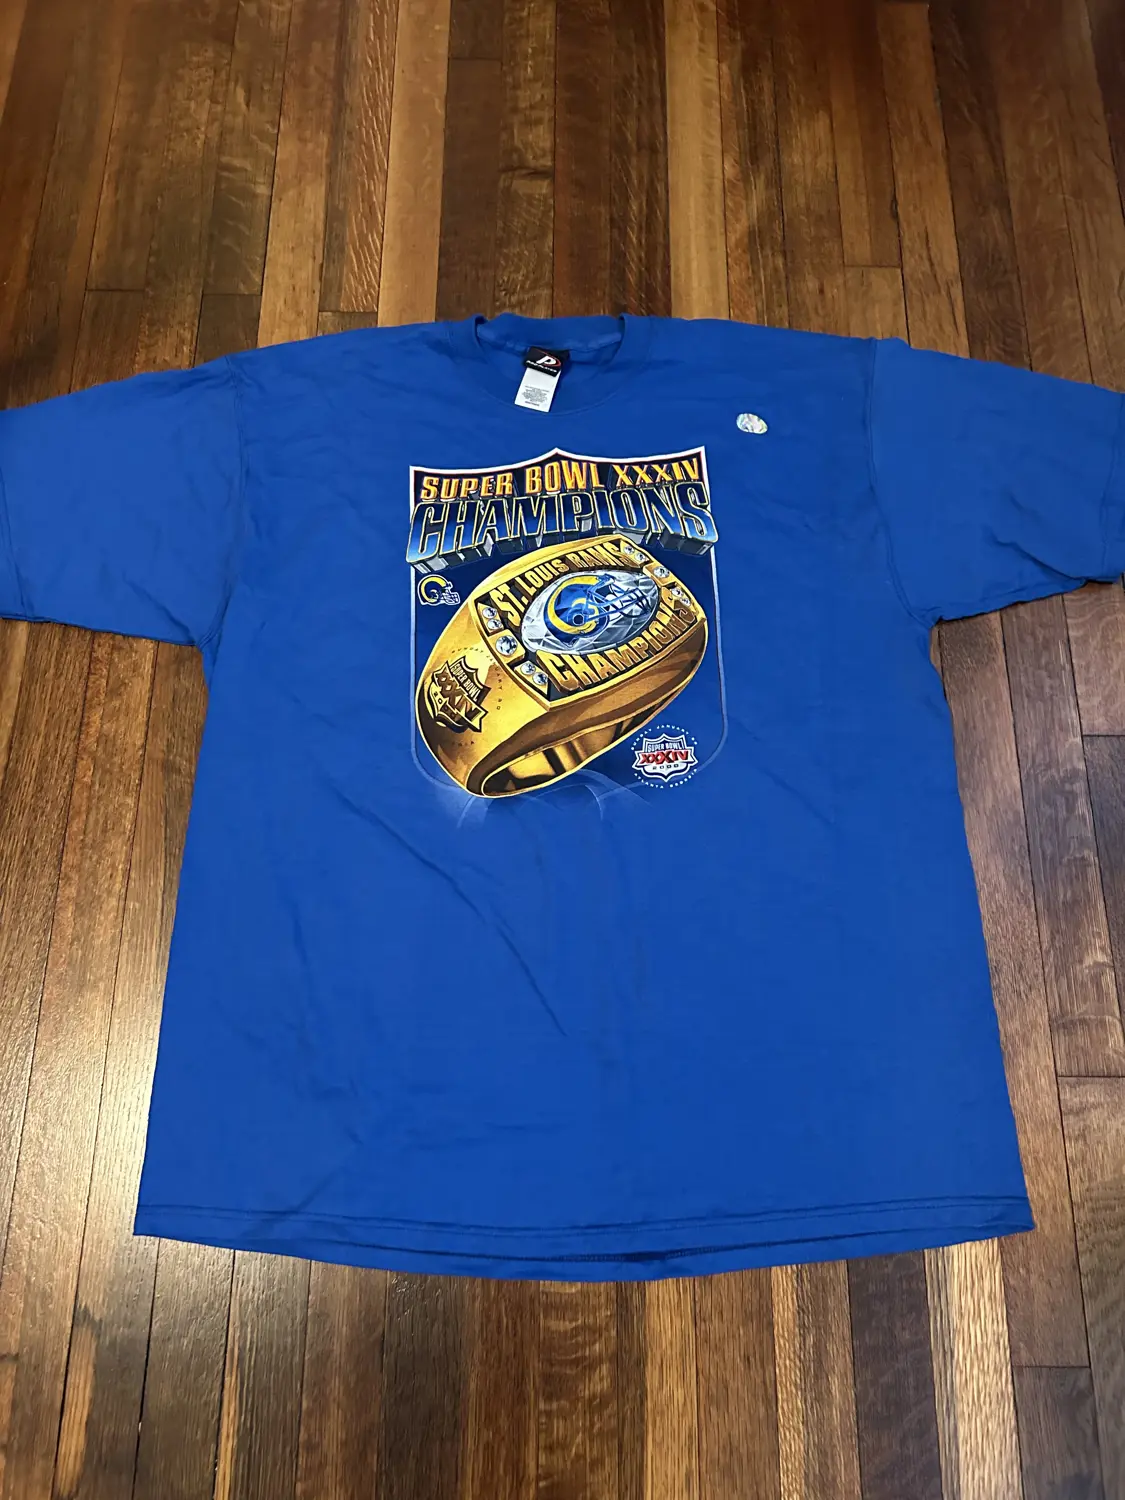 2000 St. Louis Rams T-Shirt